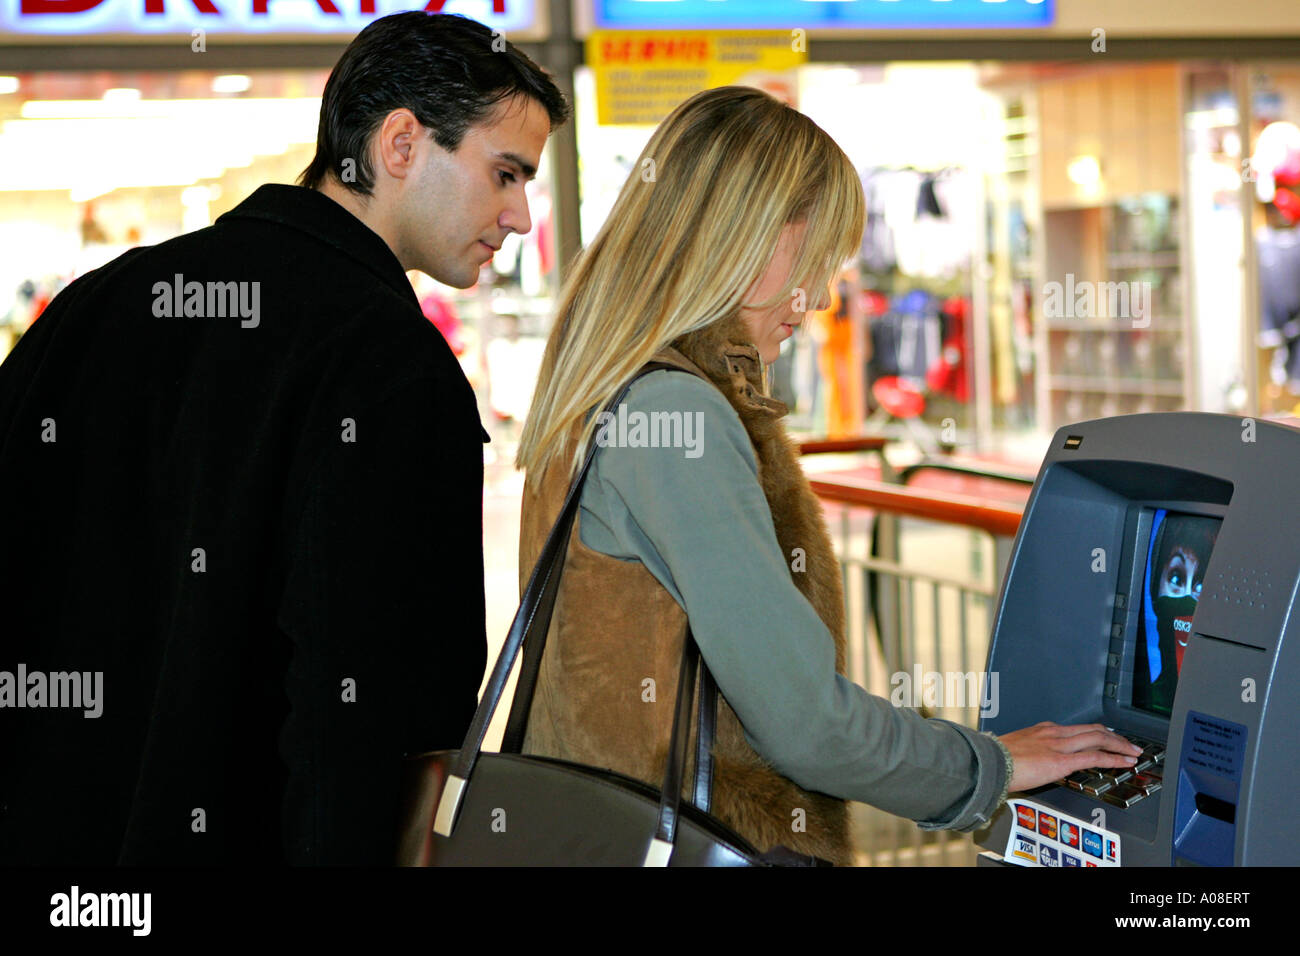 Frau am Geldautomaten Mann schaut nach Nummer PIN, donna al cash dispenser uomo cerca per codice pin Foto Stock